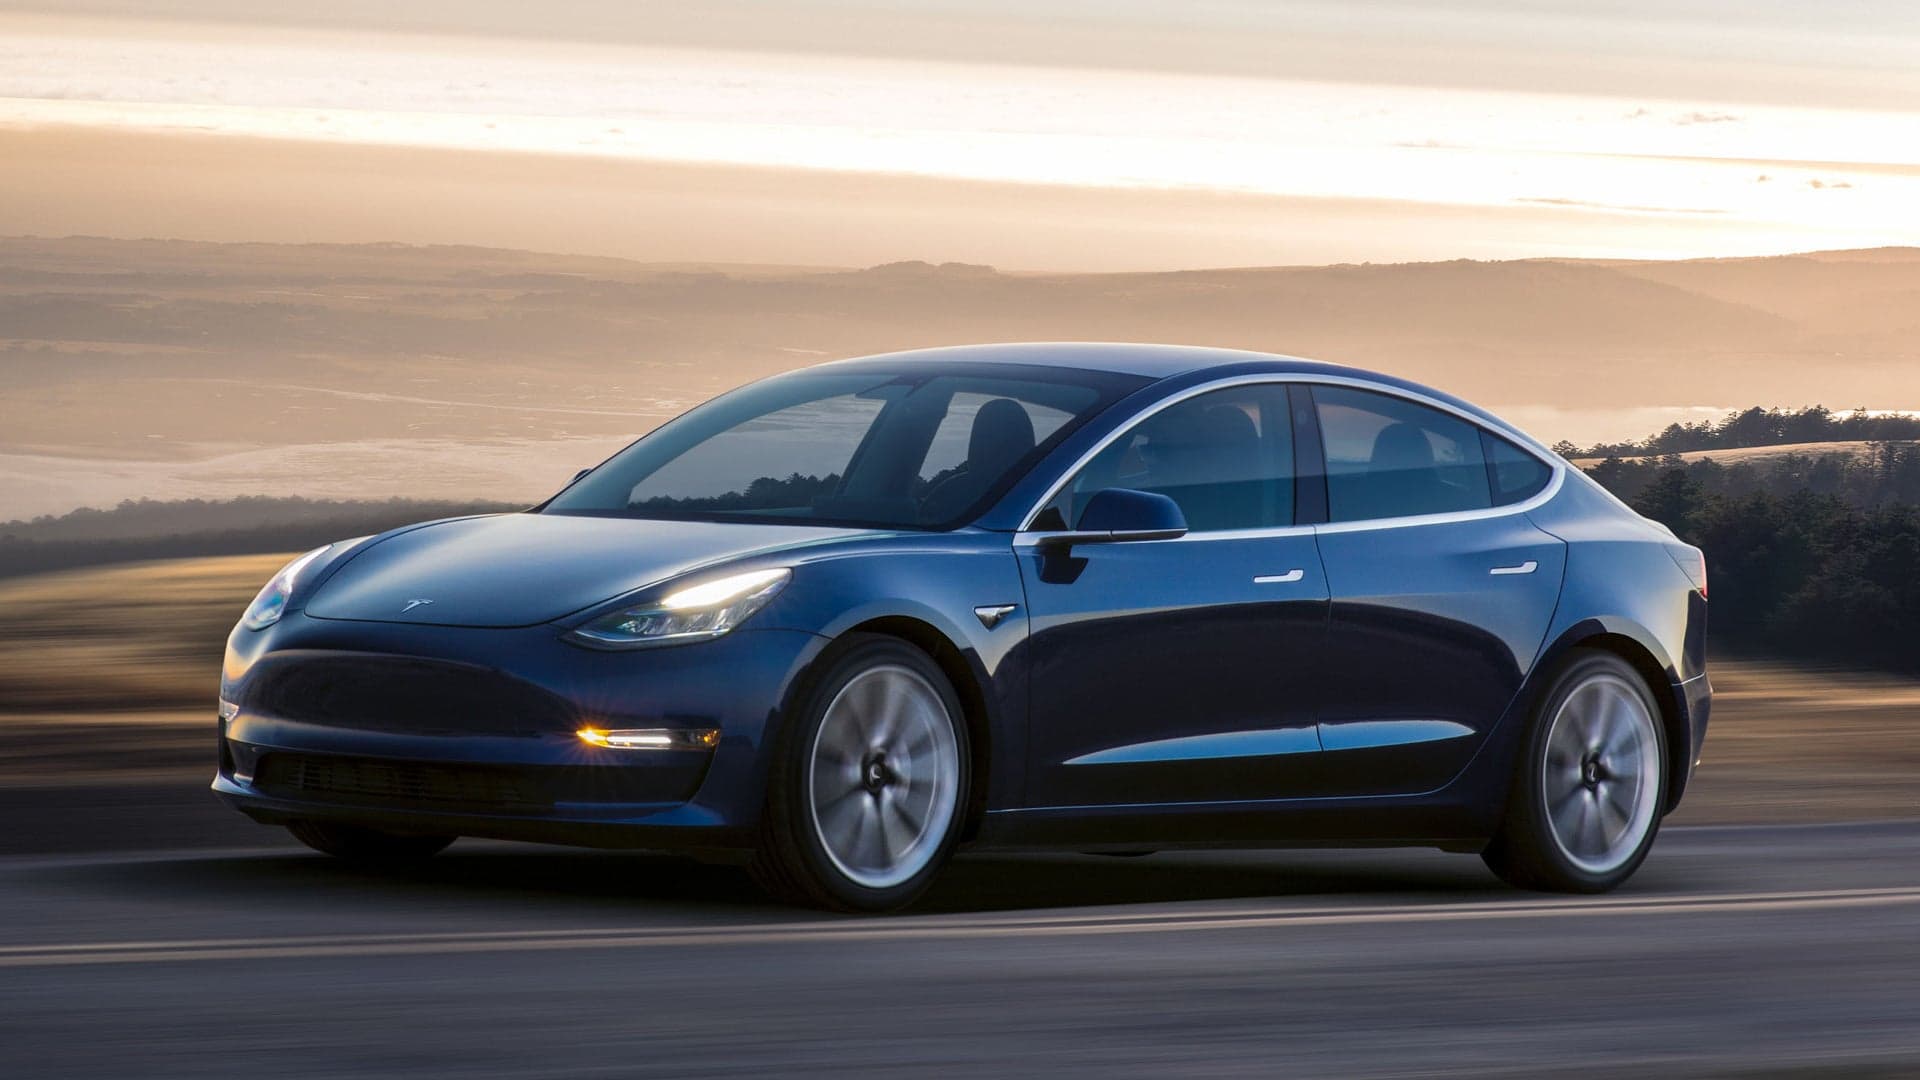 Return-A-Wreck? Daimler Reportedly Took Apart Rented Tesla Model X